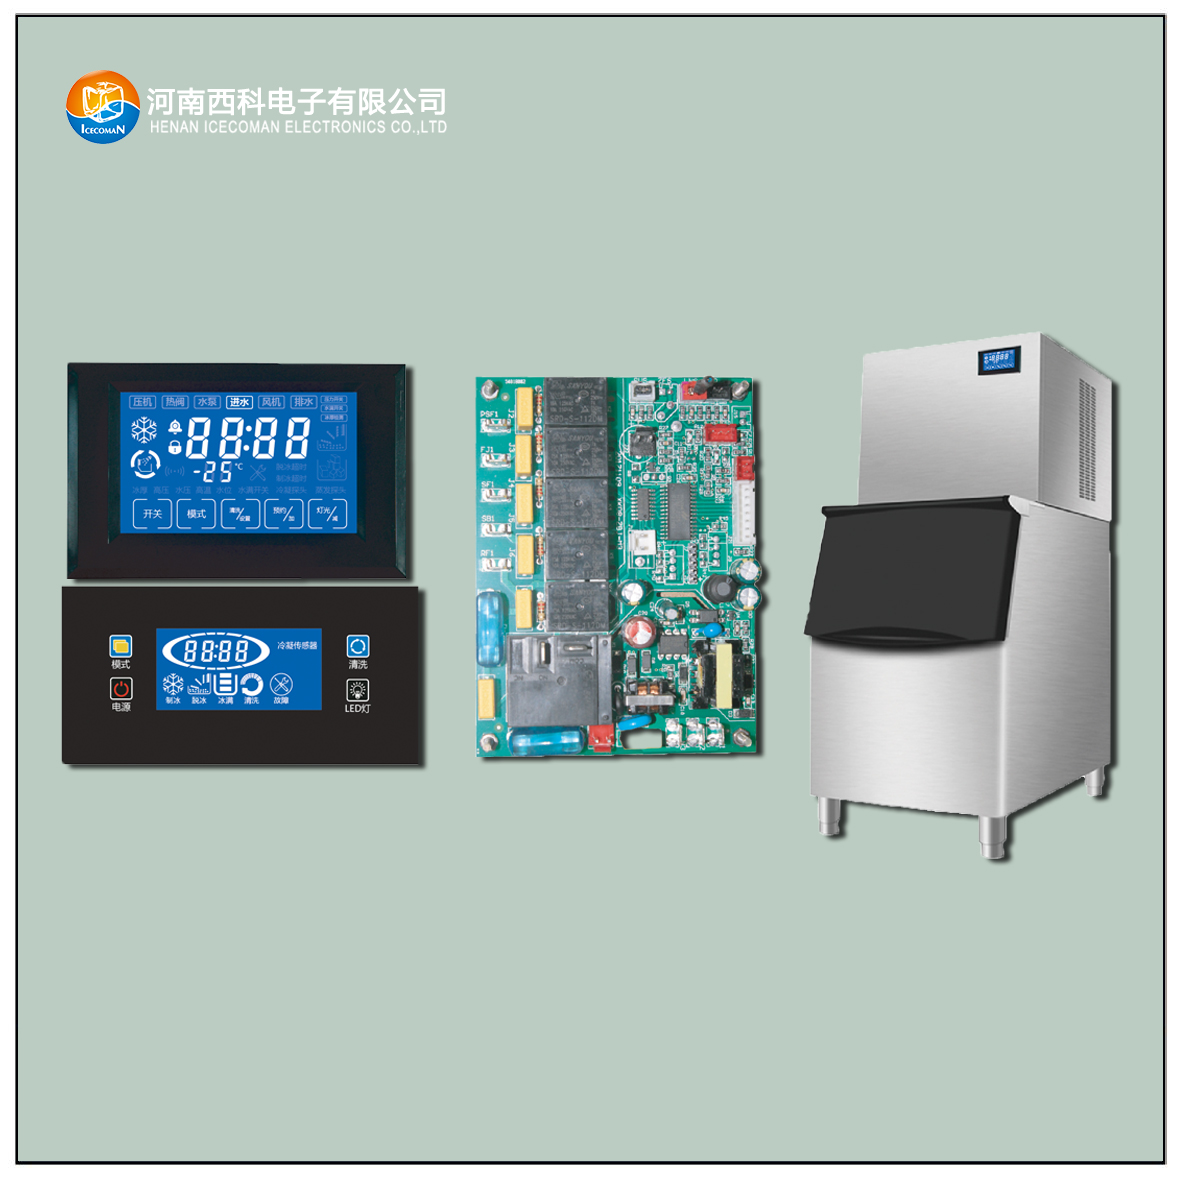 ZBJ-LCD-A/B ice maker controller